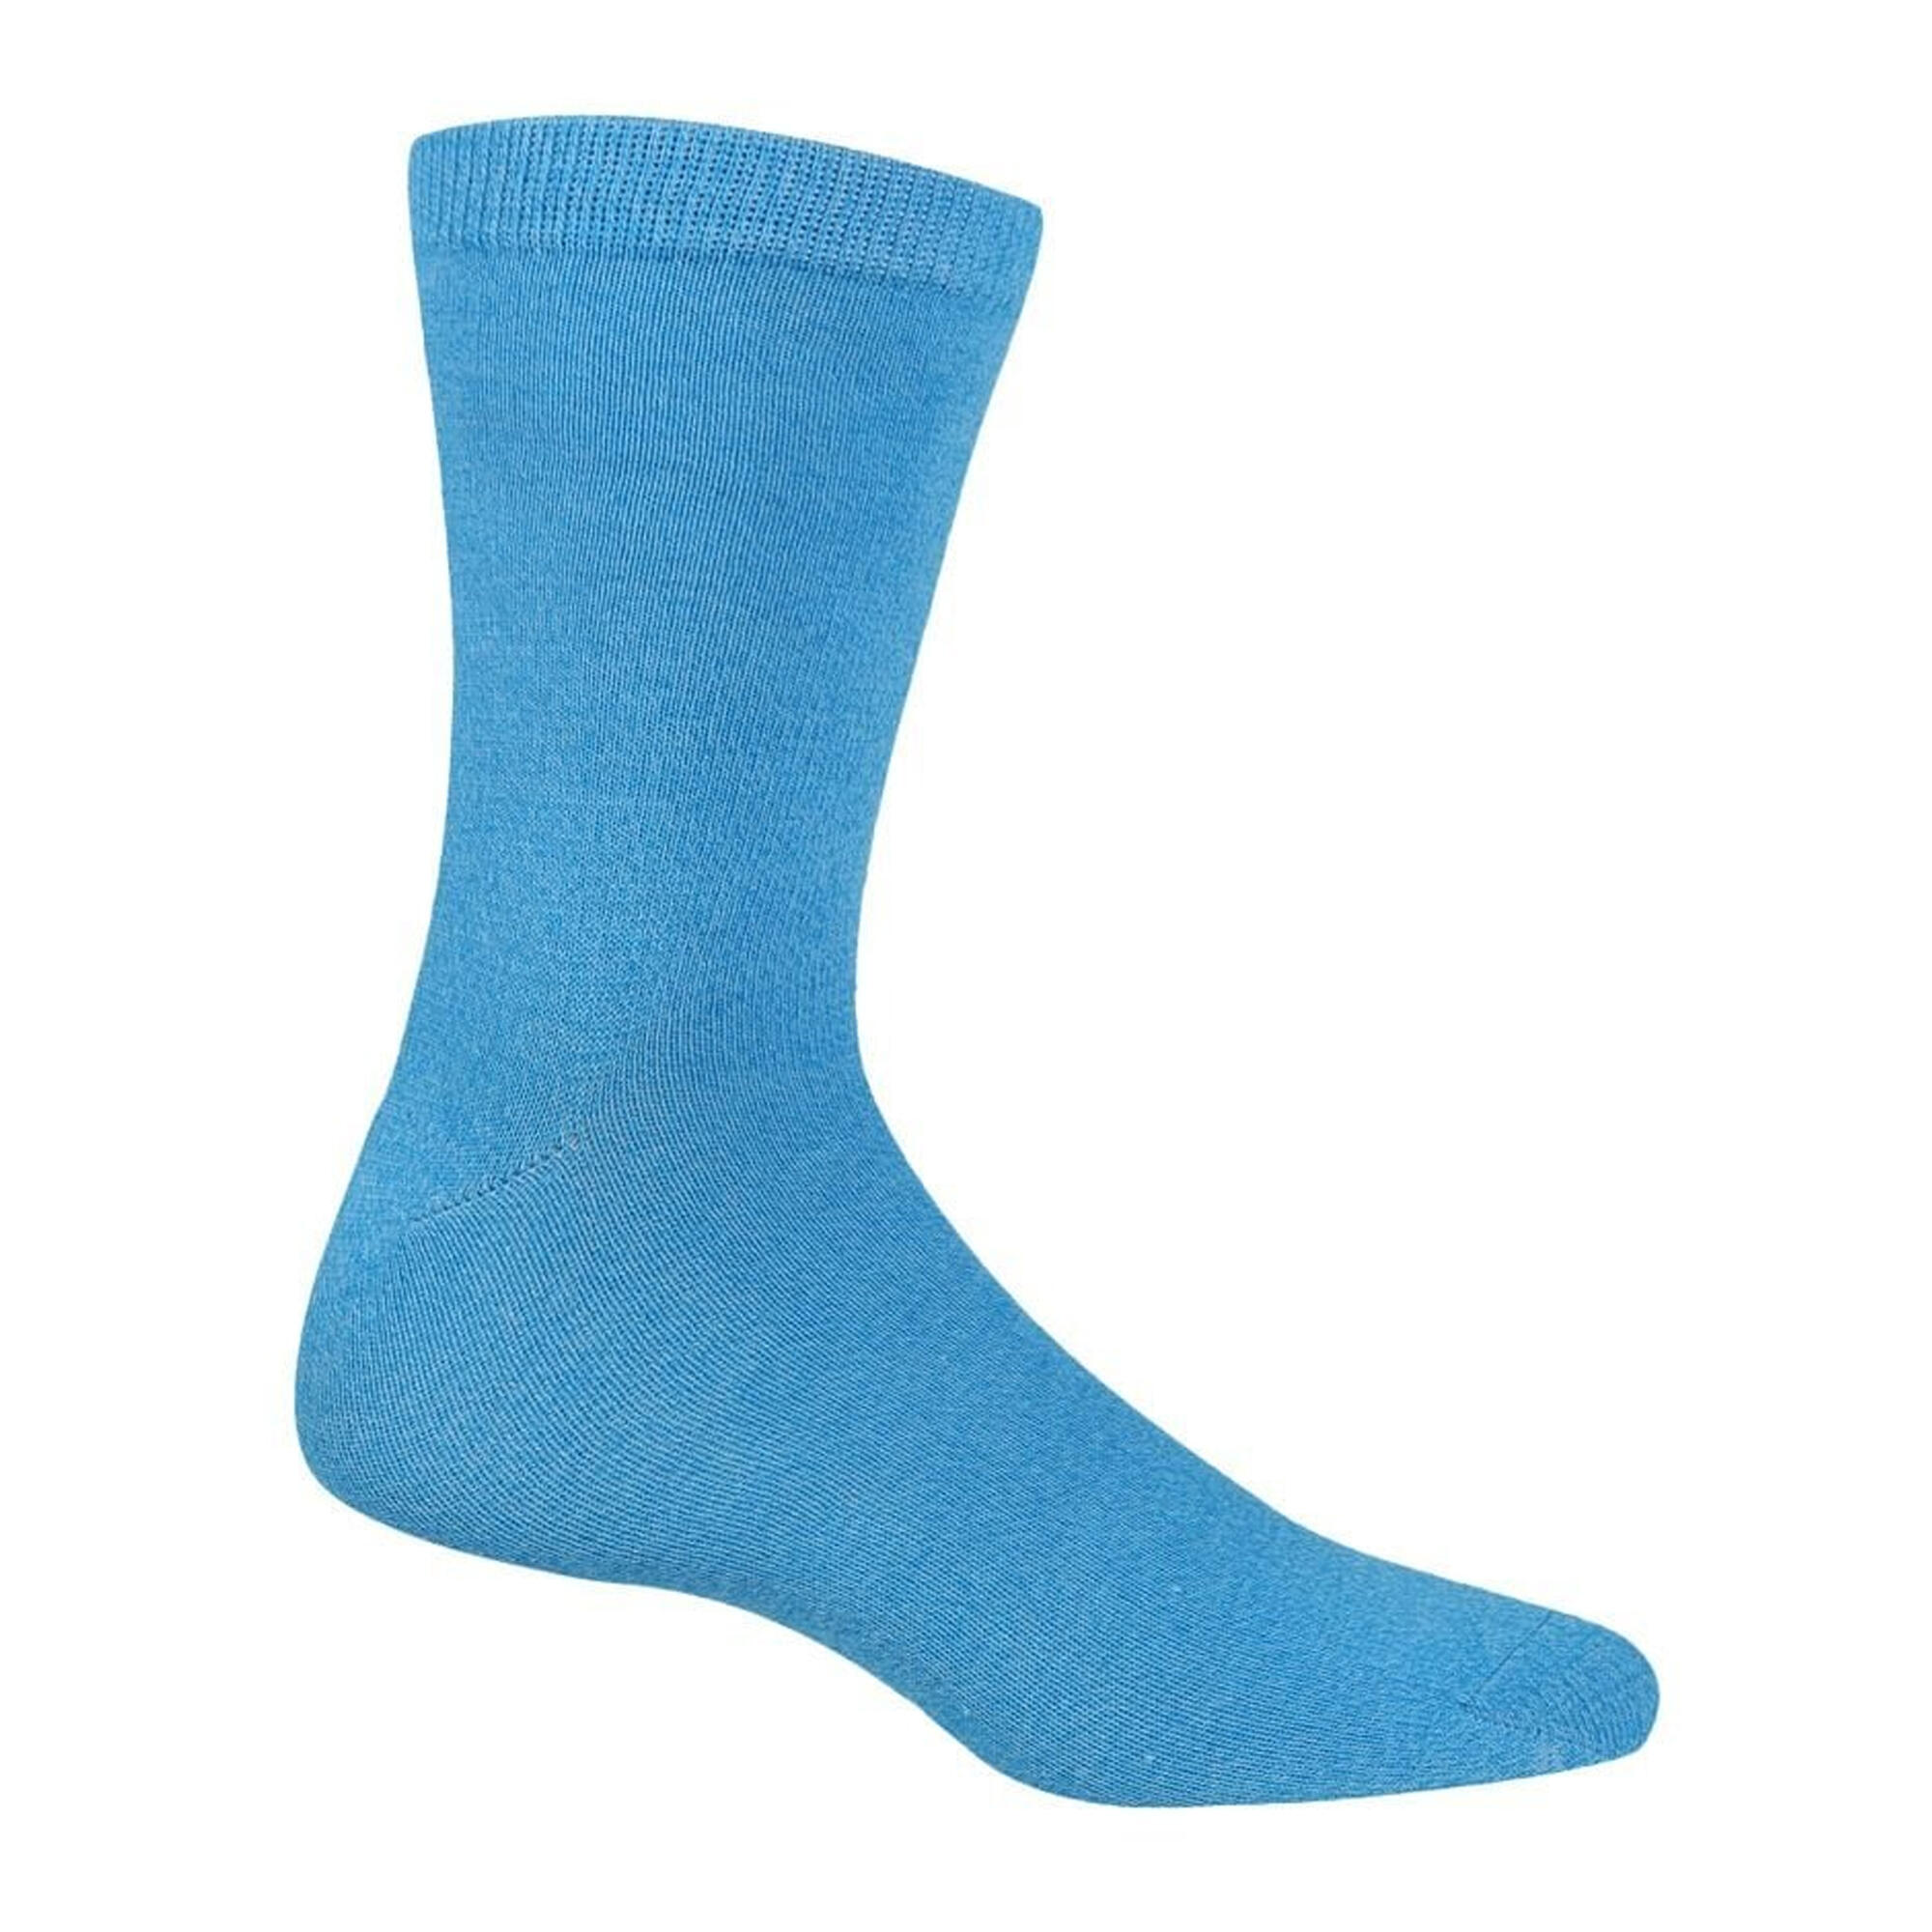 Womens/Ladies Lifestyle Ankle Socks Set (Pack of 4) (Light Steel/Blue) 4/5